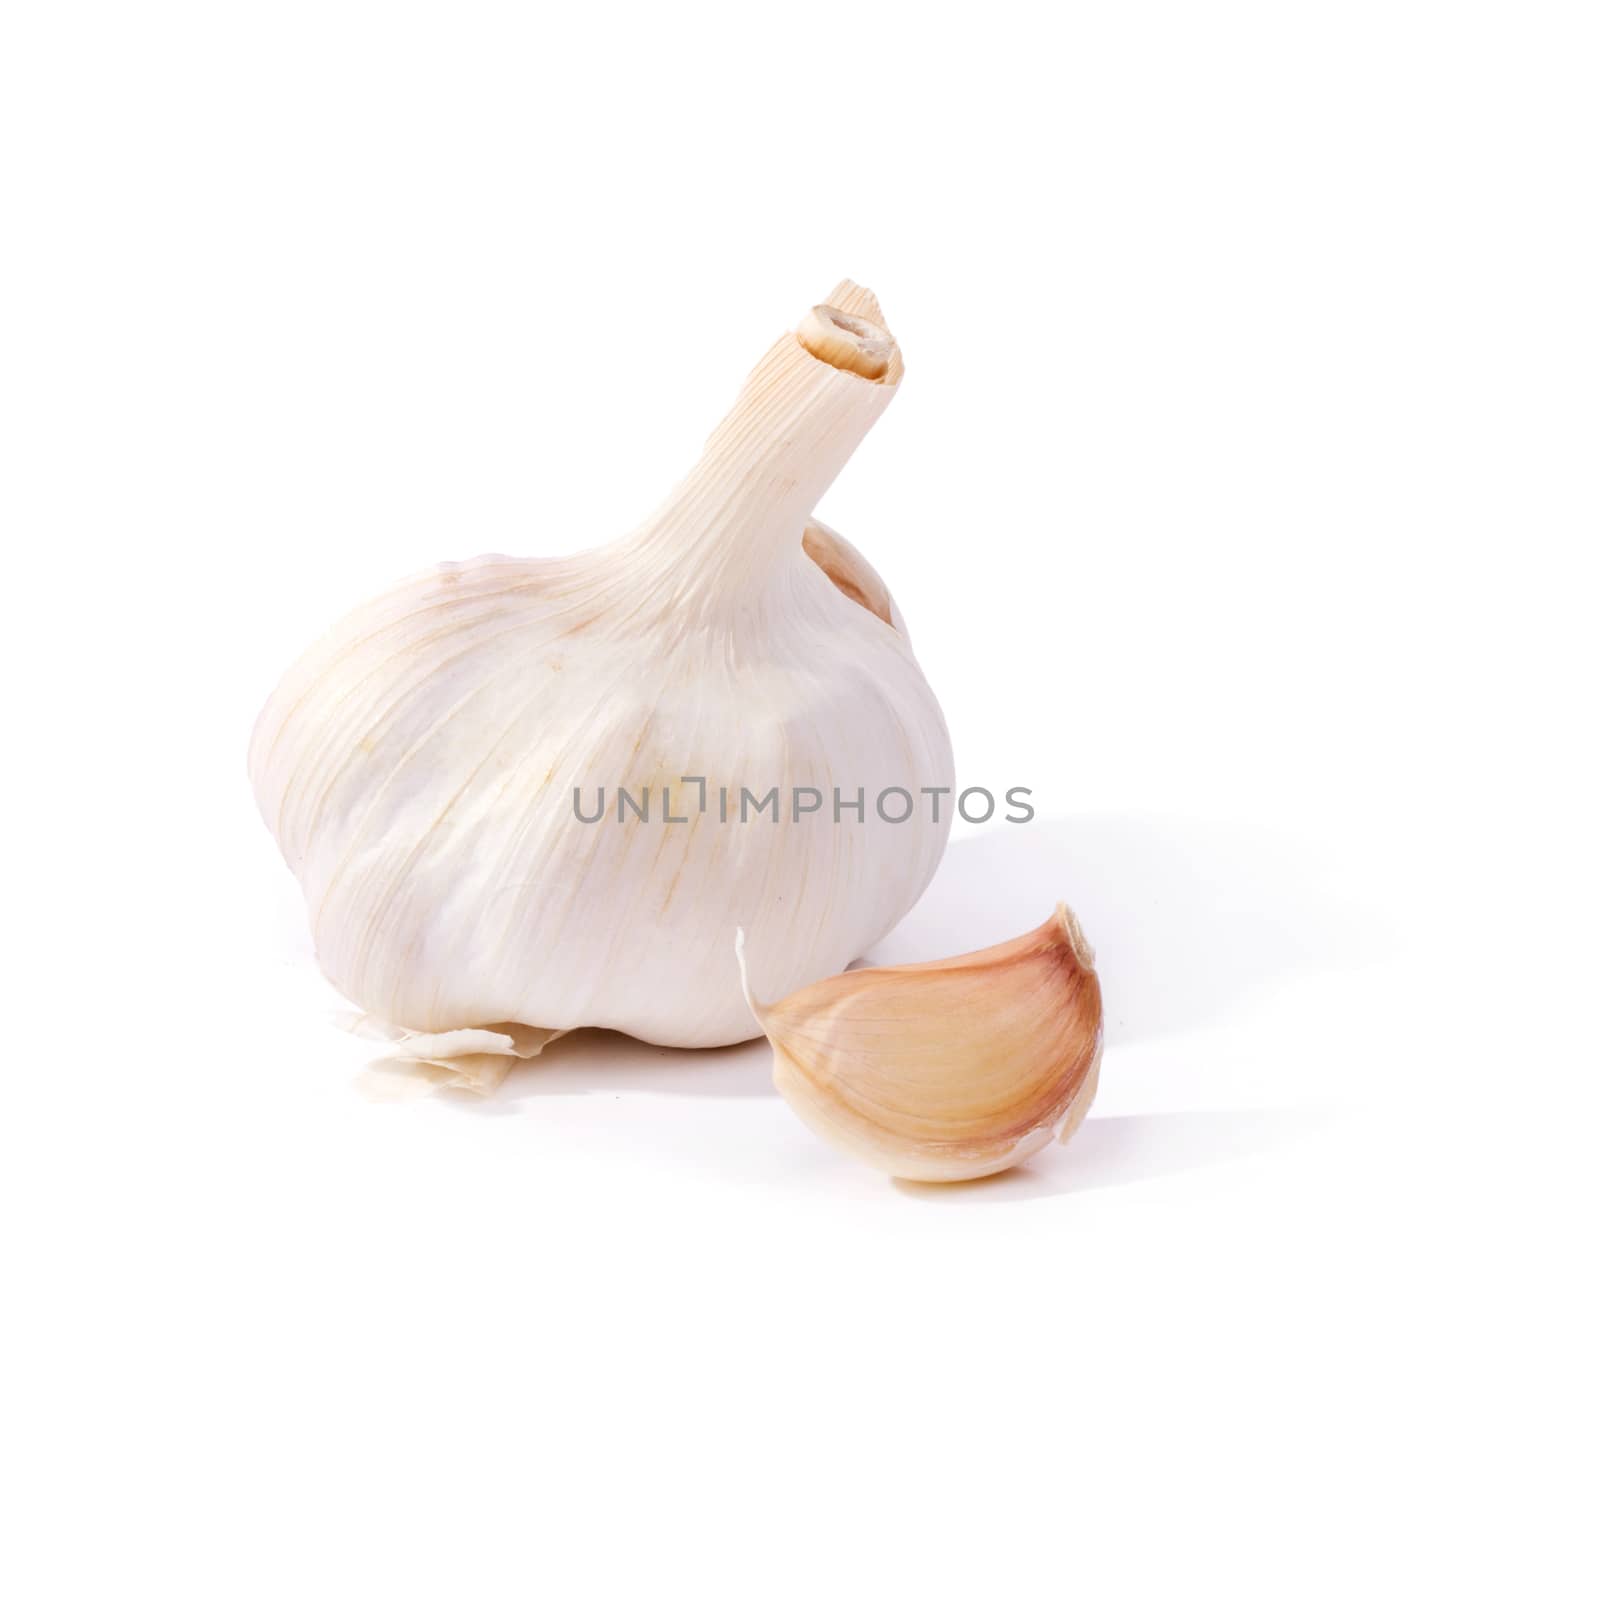 Garlic on the table by rufatjumali